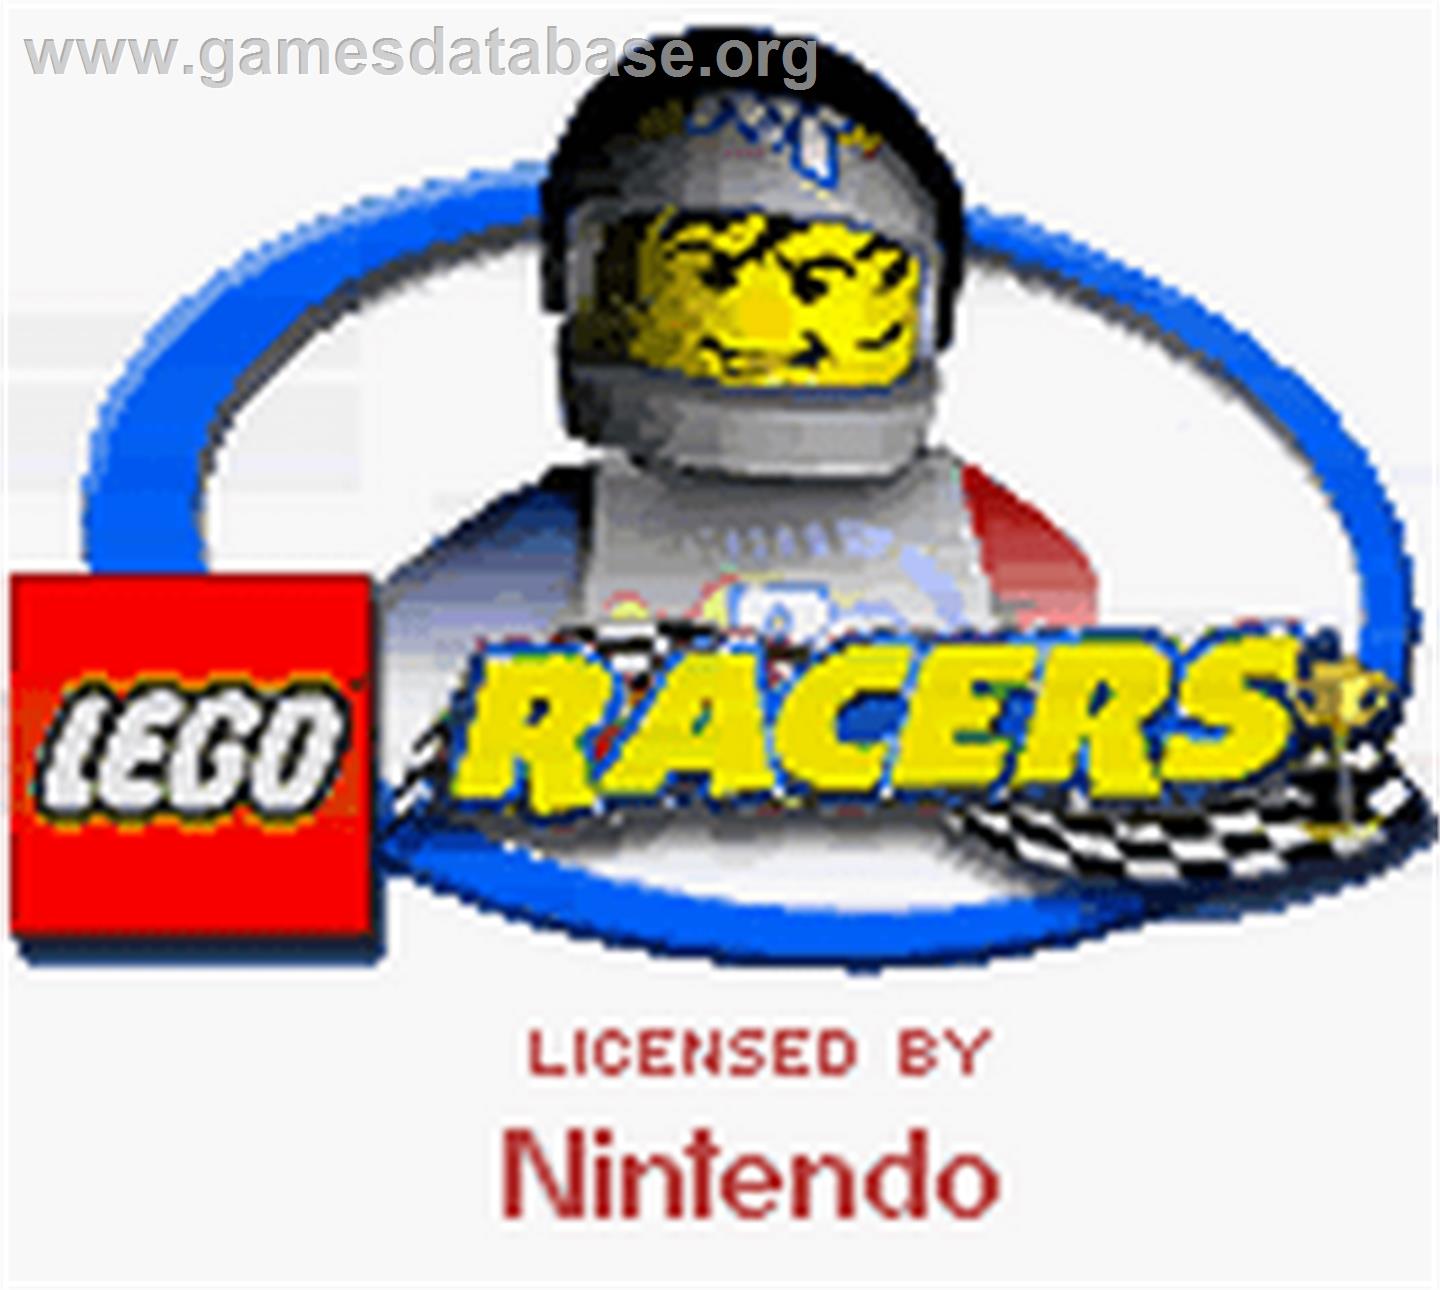 LEGO Racers - Nintendo Game Boy Color - Artwork - Title Screen